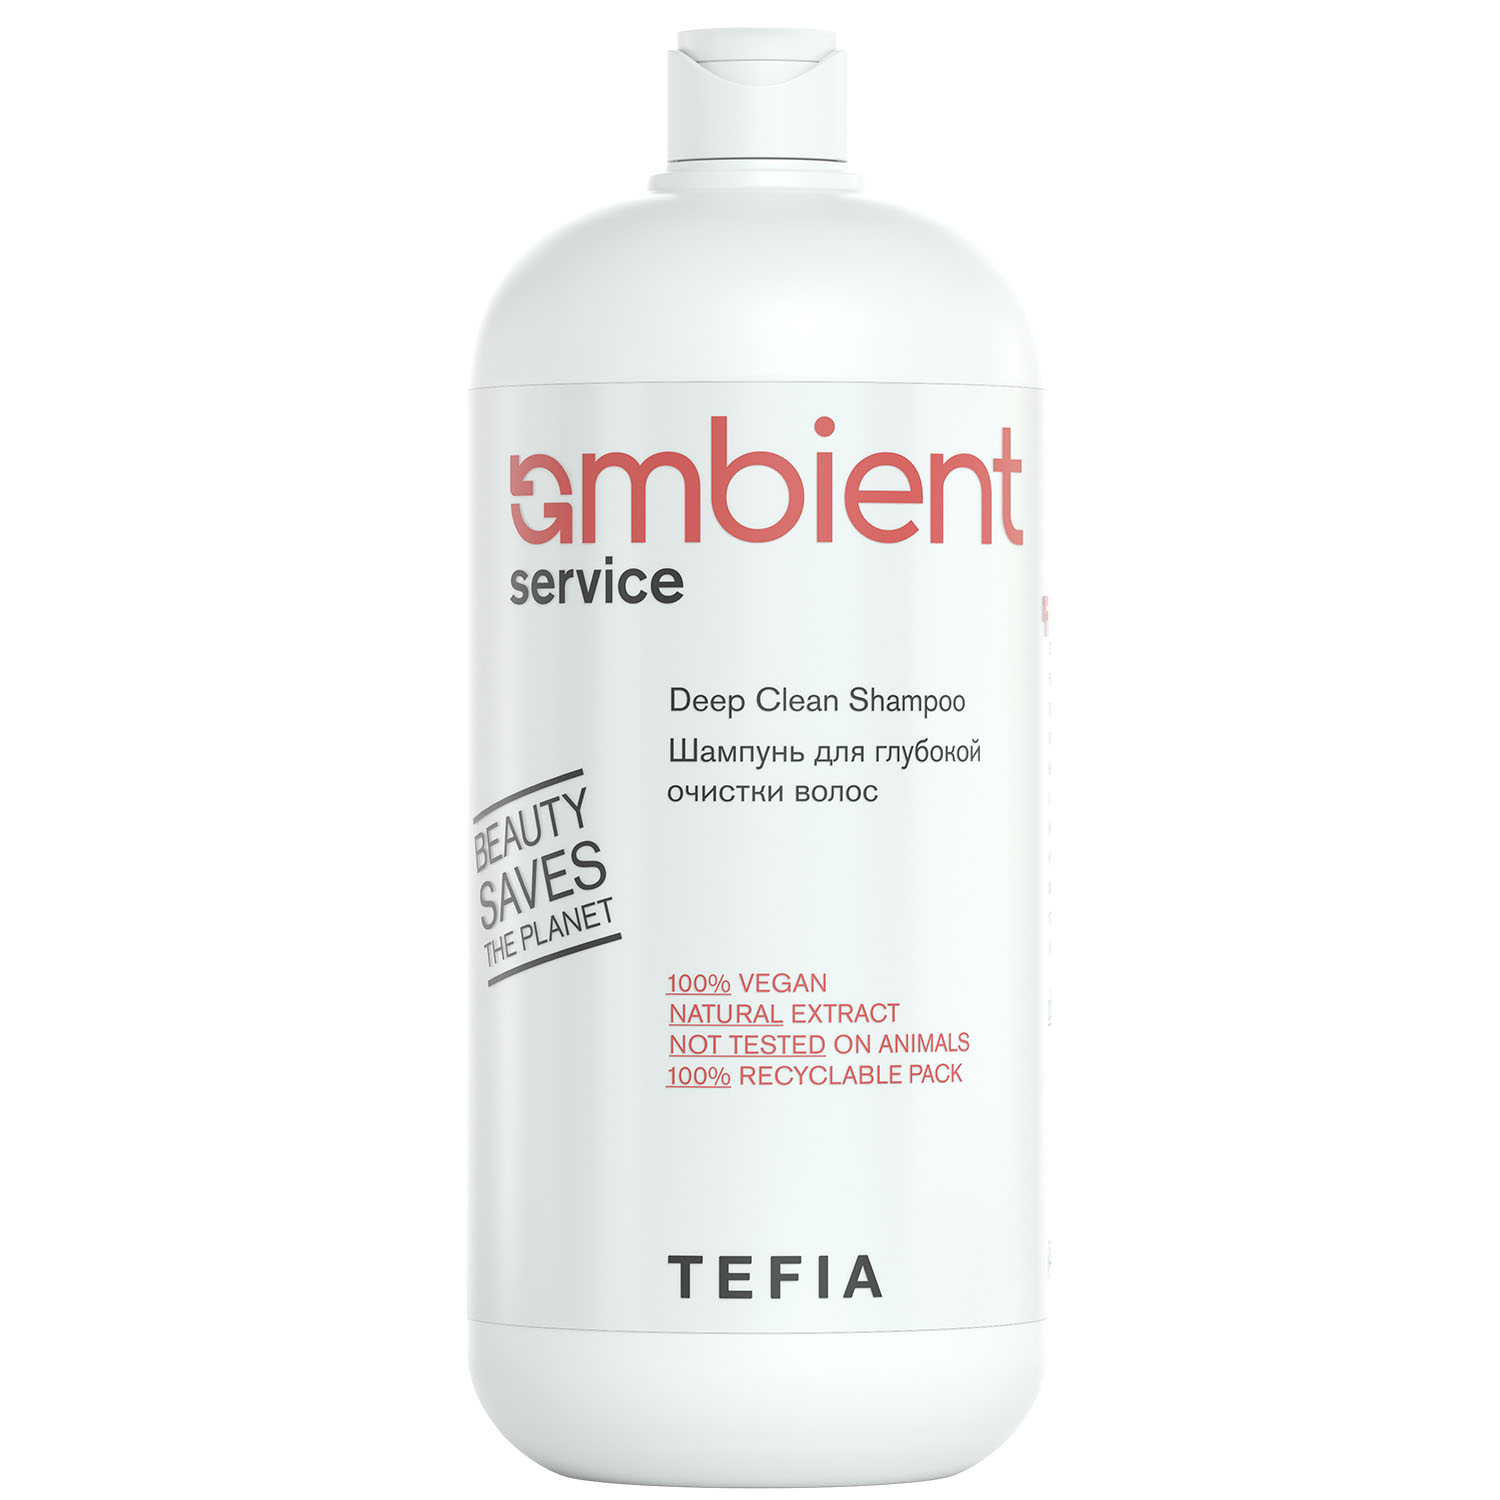 Tefia Шампунь для глубокой очистки волос Deep Clean Shampoo, 1000 мл (Tefia, Ambient)